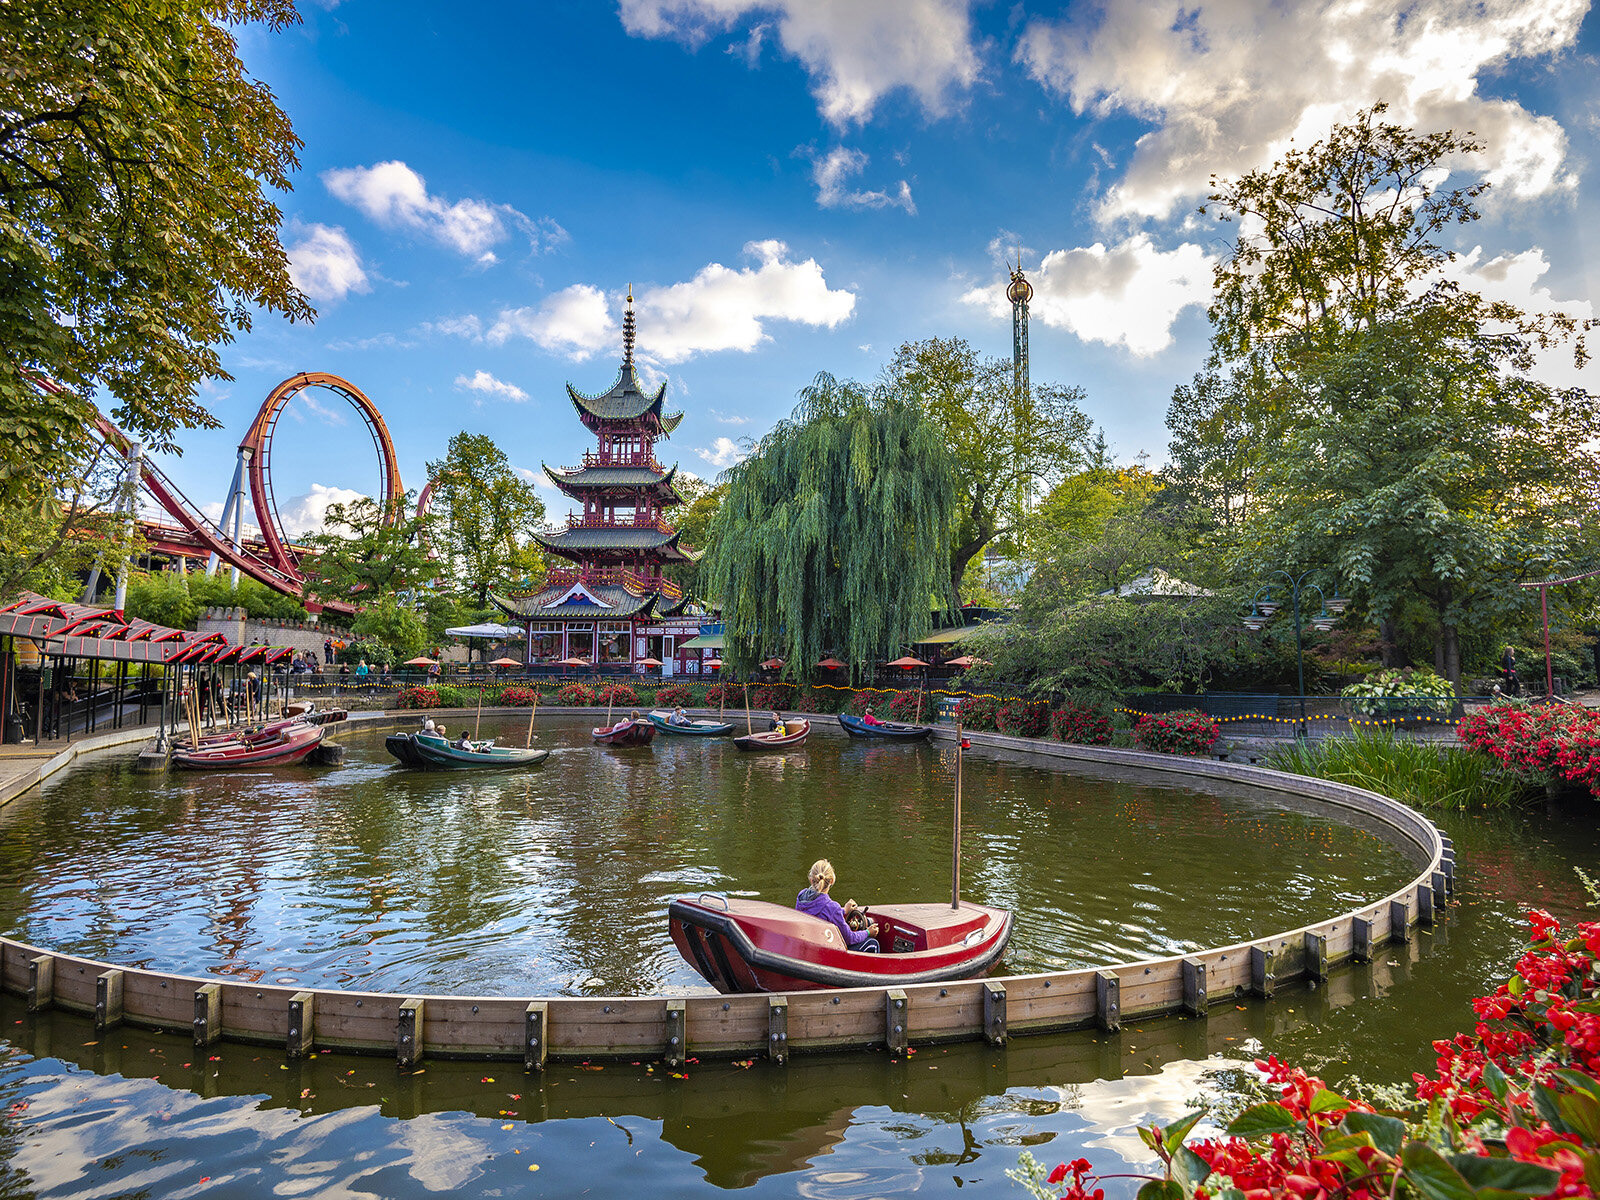 Theme parks around the world to explore from Dubai - Trivoli Gardens, Denmark